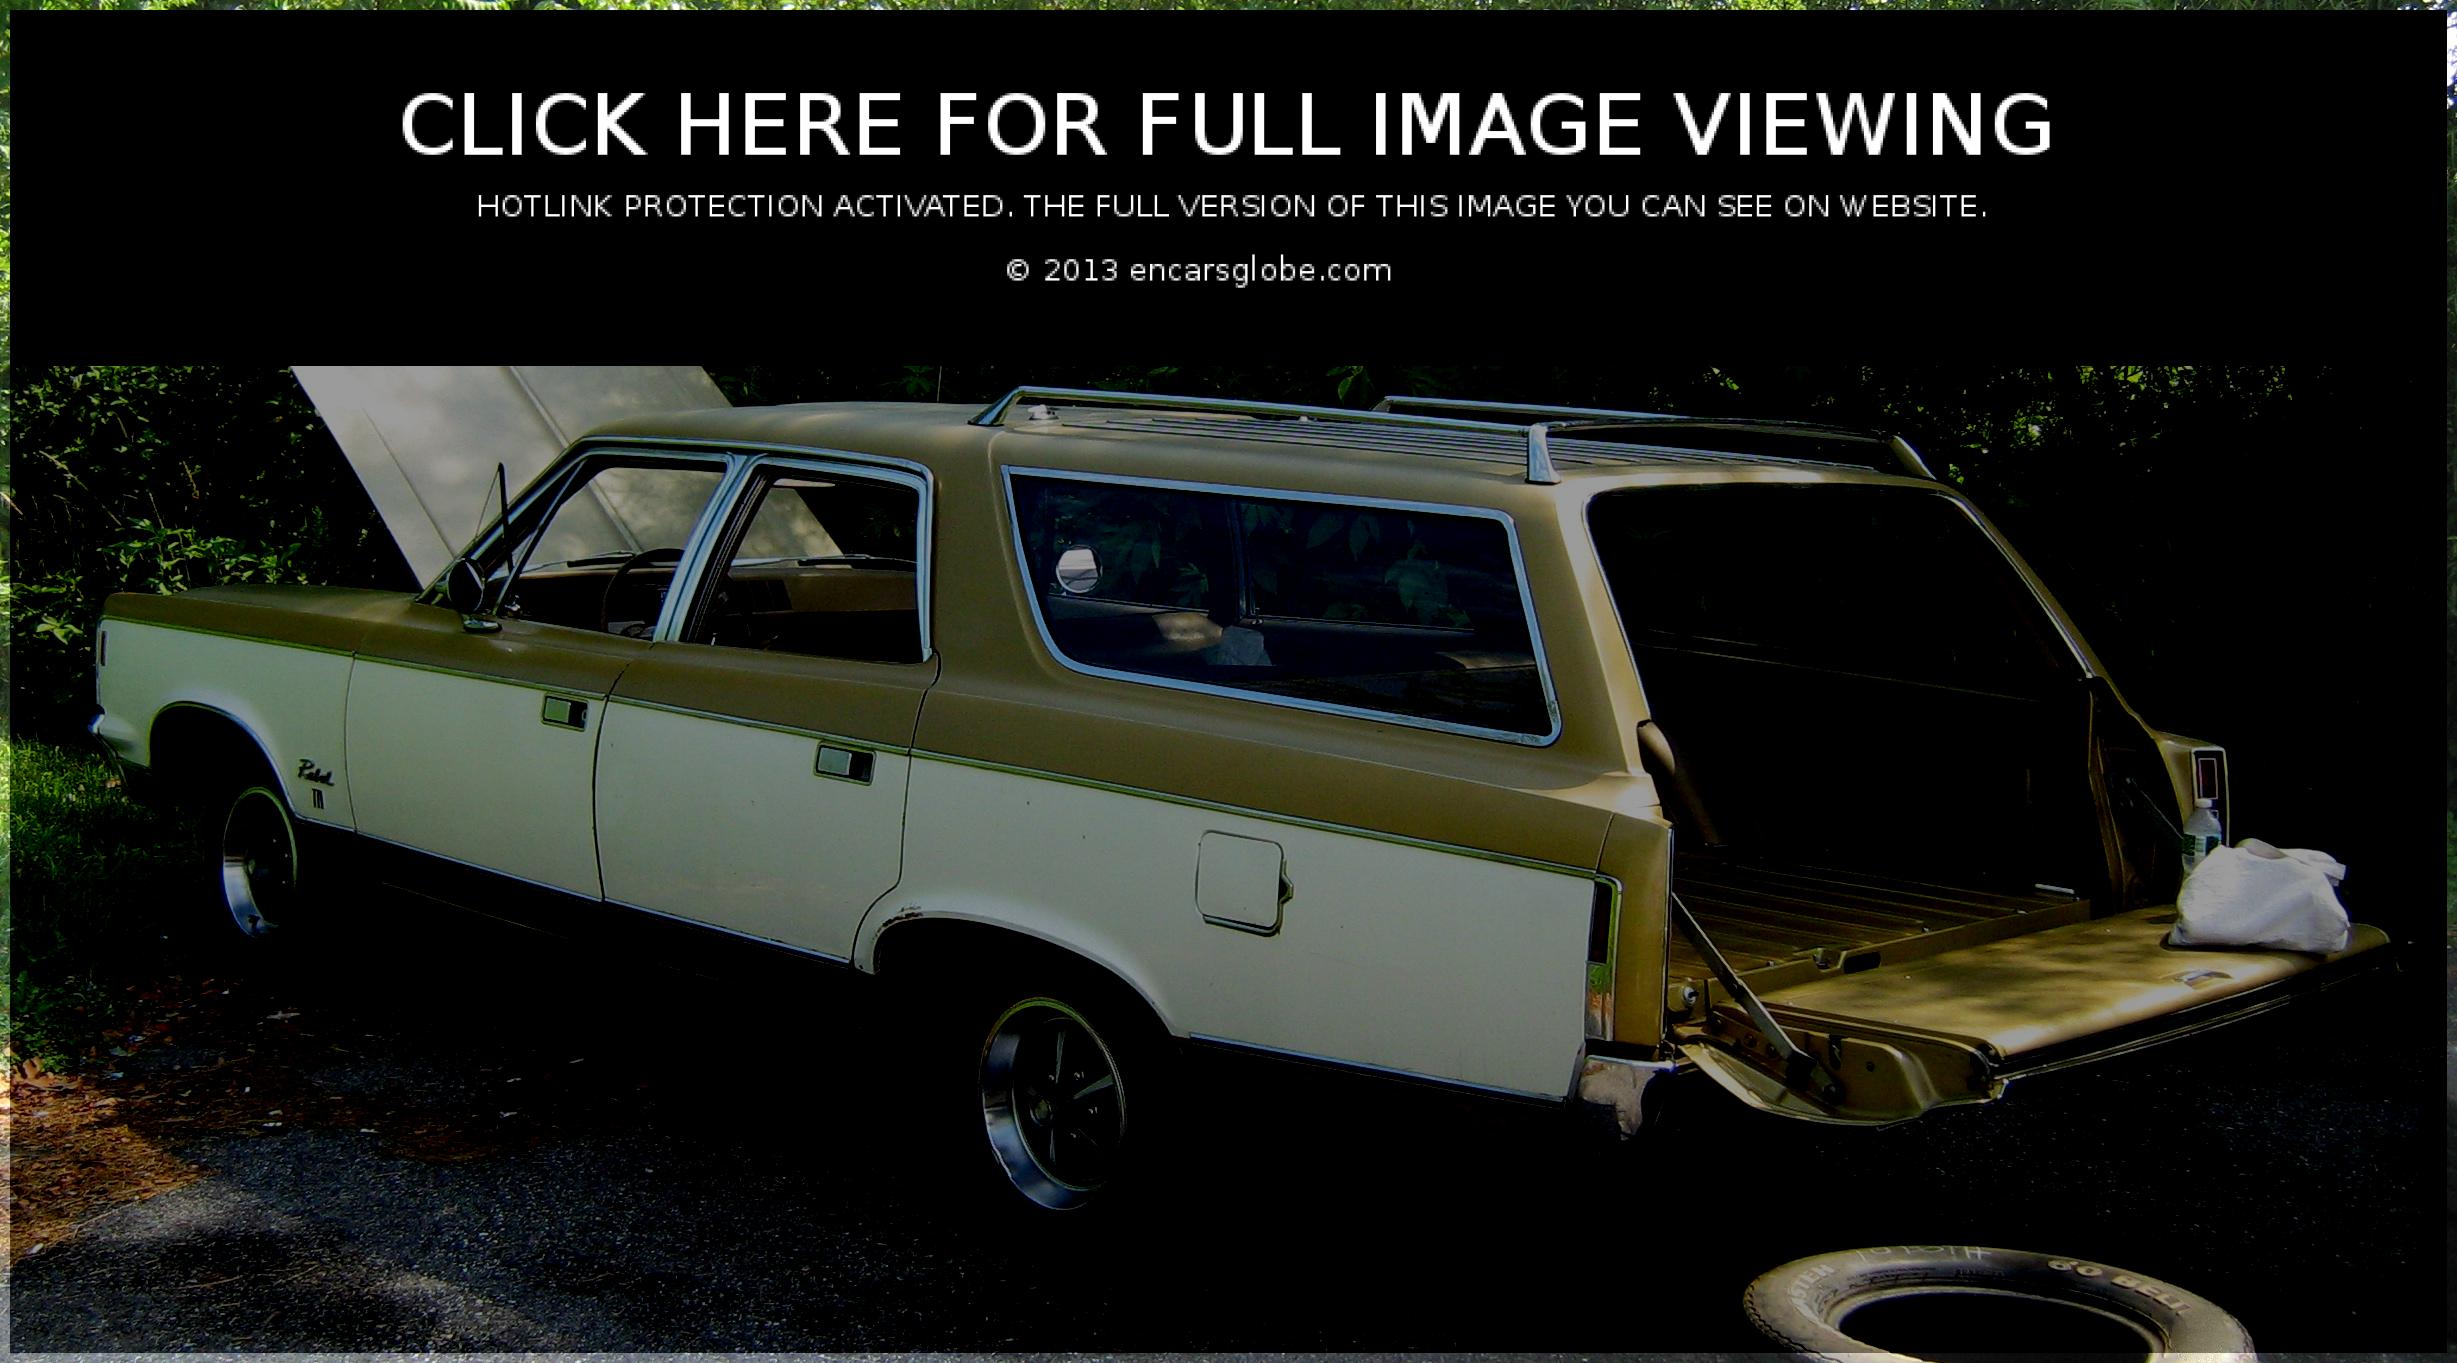 Rambler Rebel 770 wagon: Galerie de photos, informations complètes sur...